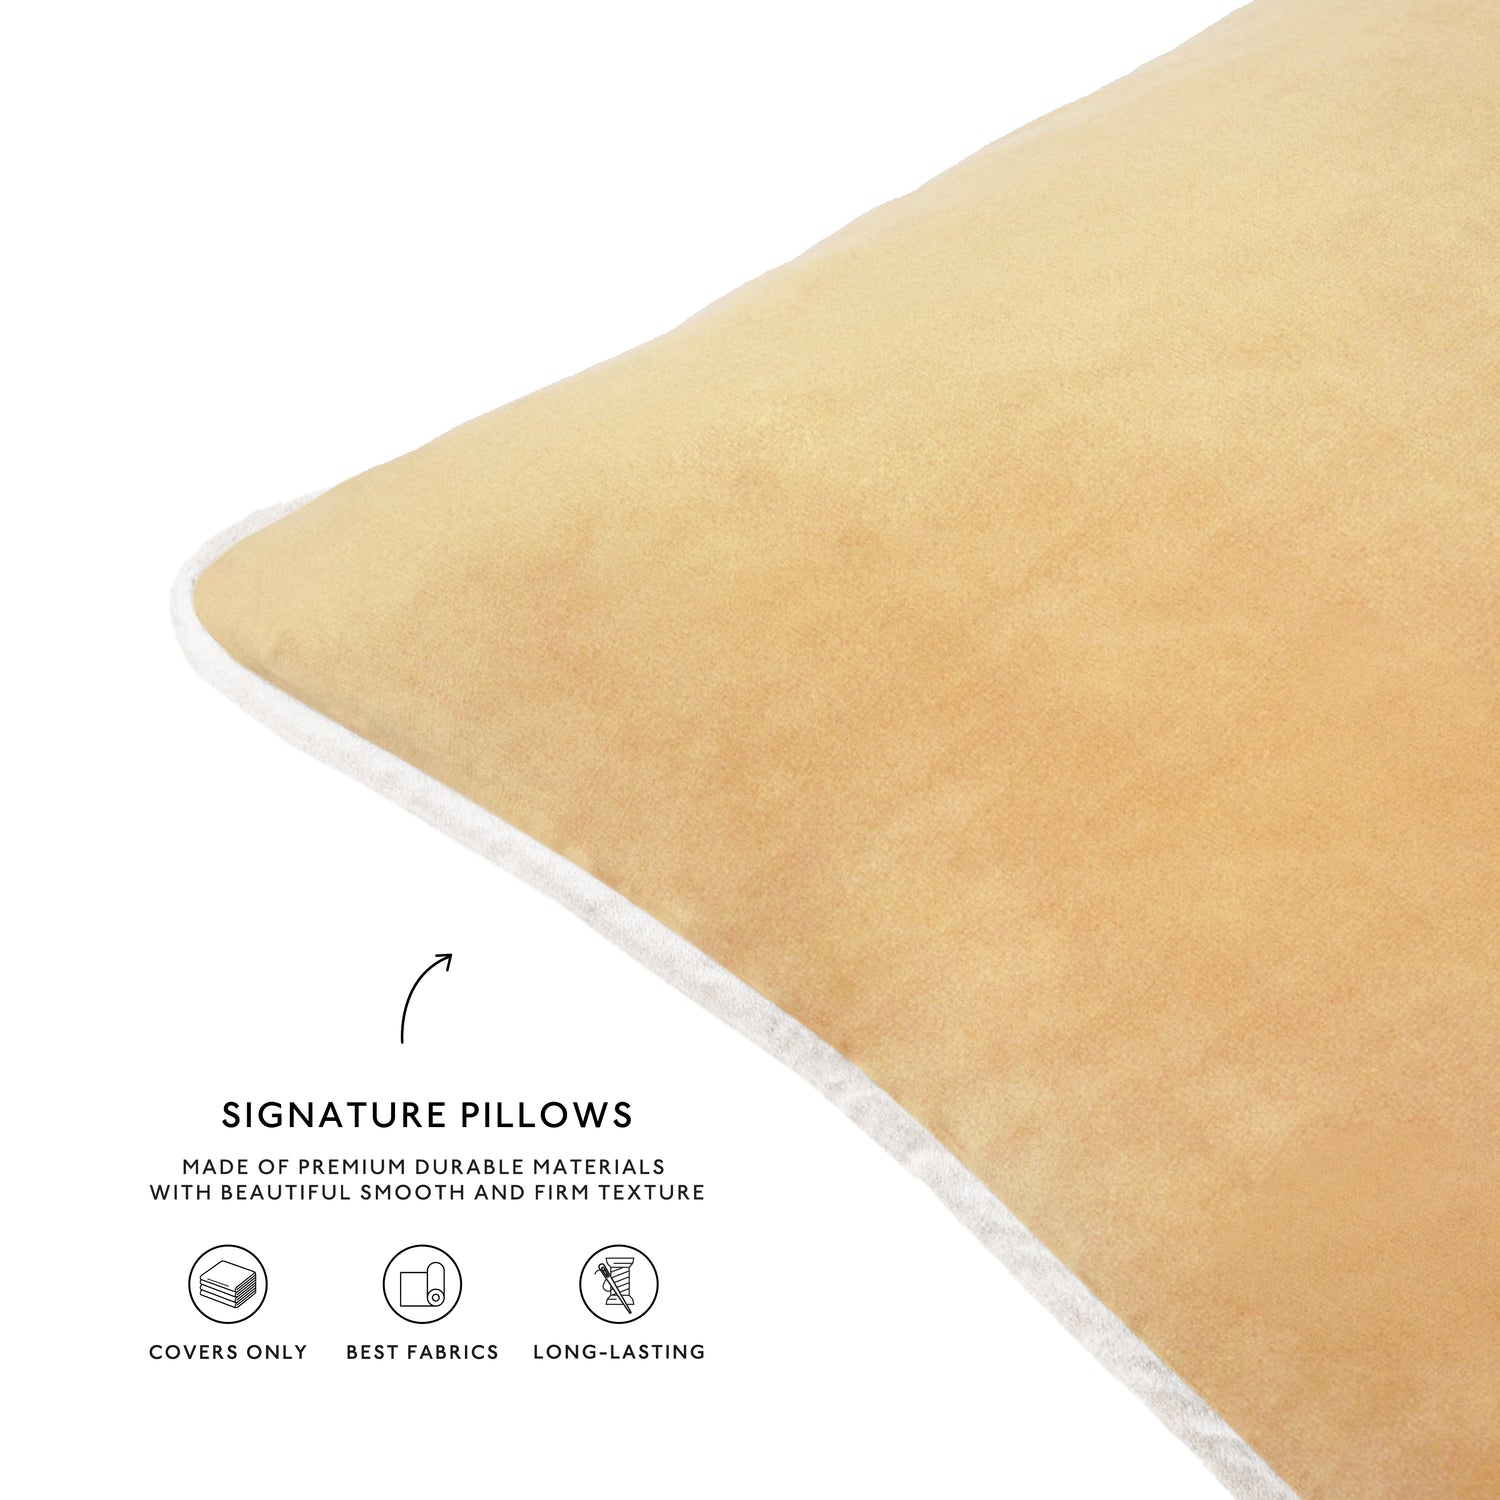 decorative throw pillow covers velvet home decor blue beige white teal shams cushions